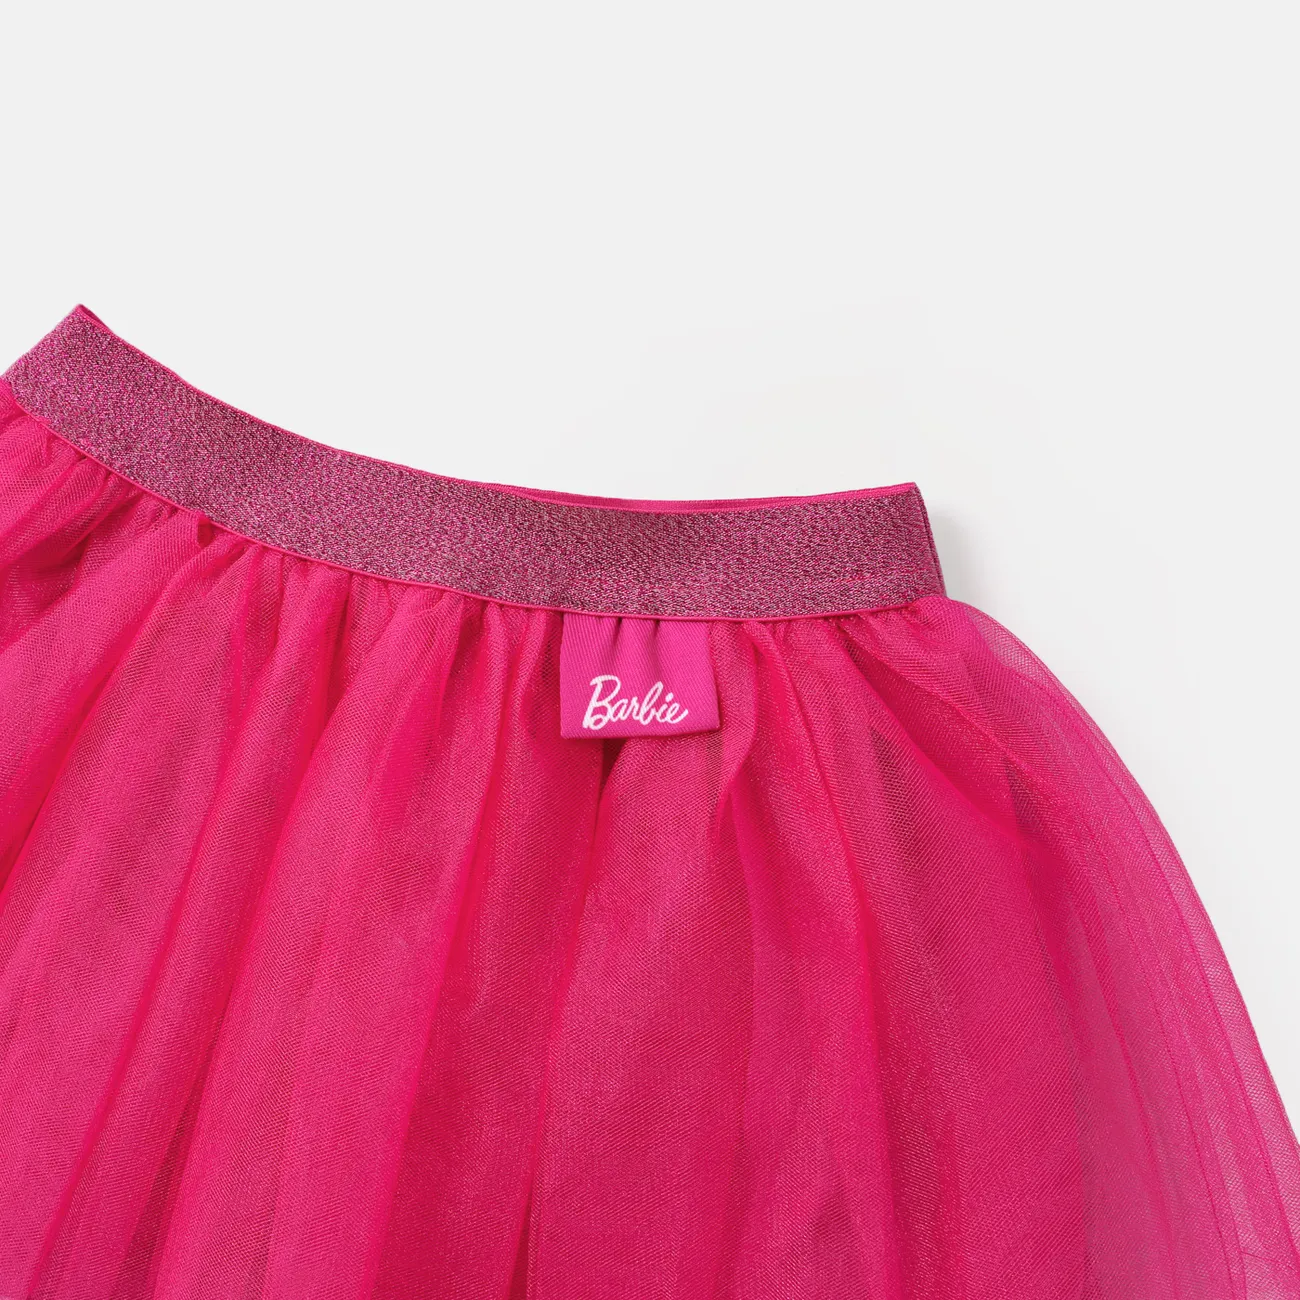 Barbie 2pcs Toddler Girl Tie Knot Cotton Tee and Mesh Skirt Set PinkyWhite big image 1